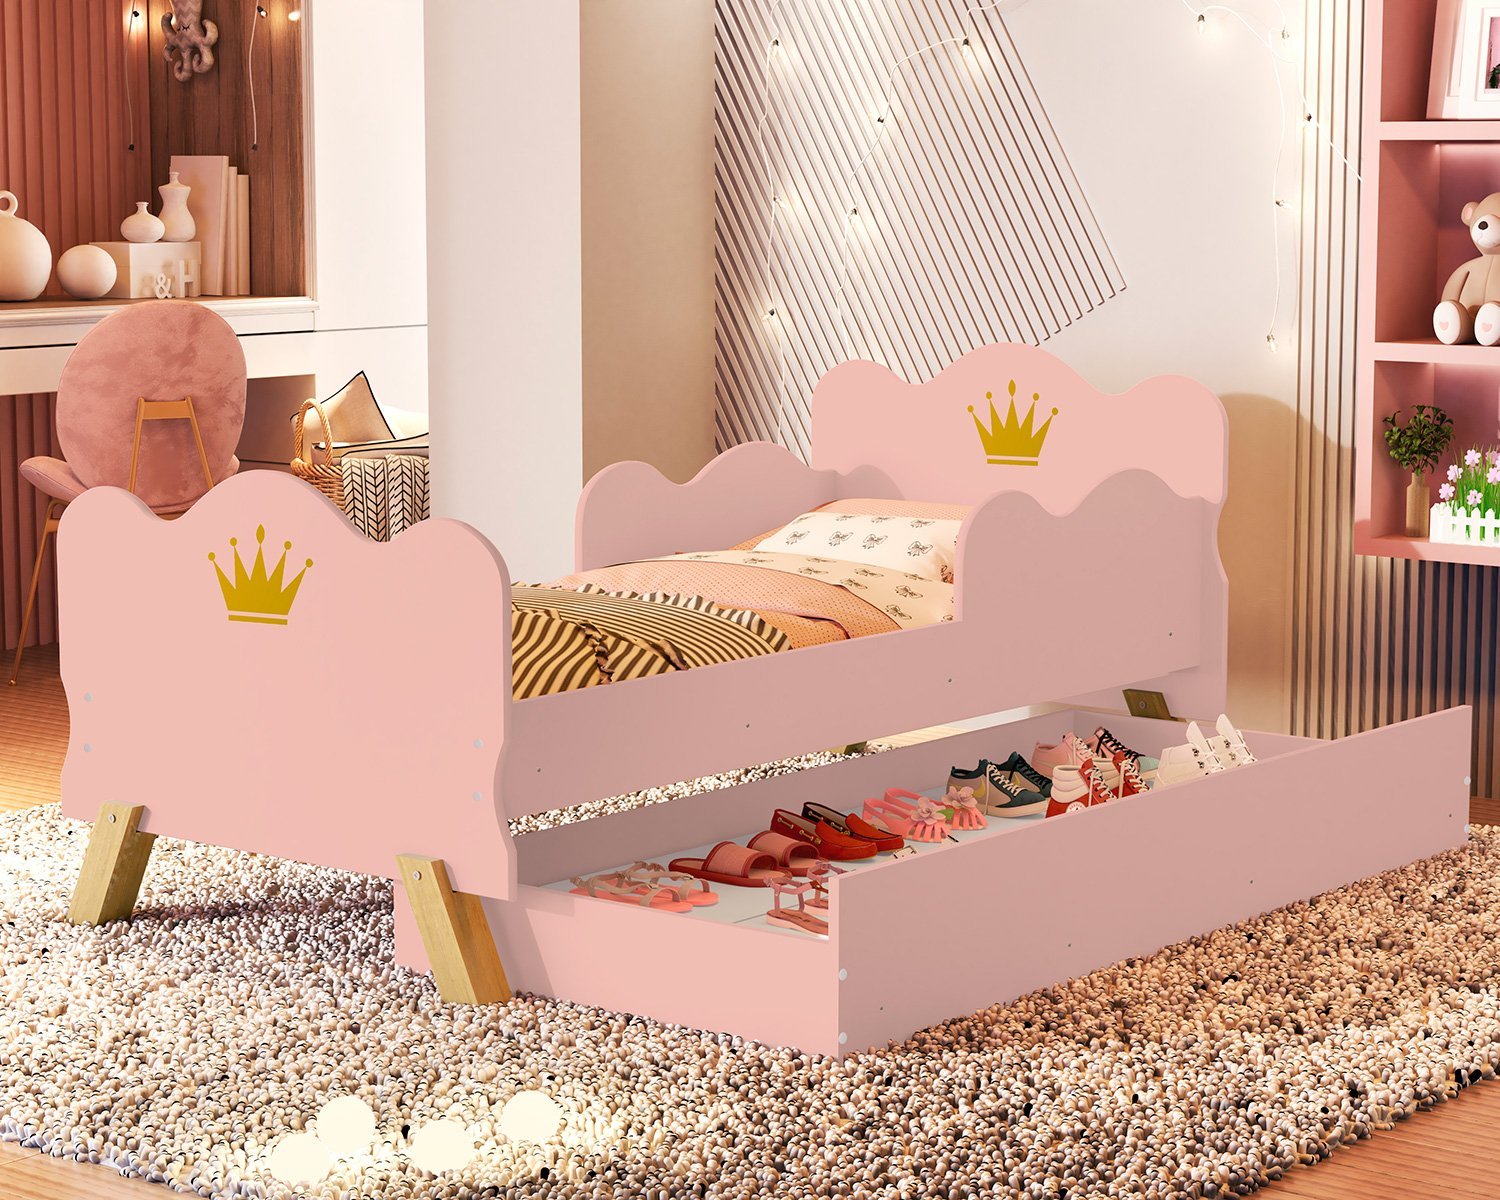 Mini cama Juvenil Infantil Gatinho Branca/Rosa - Móveis Bela